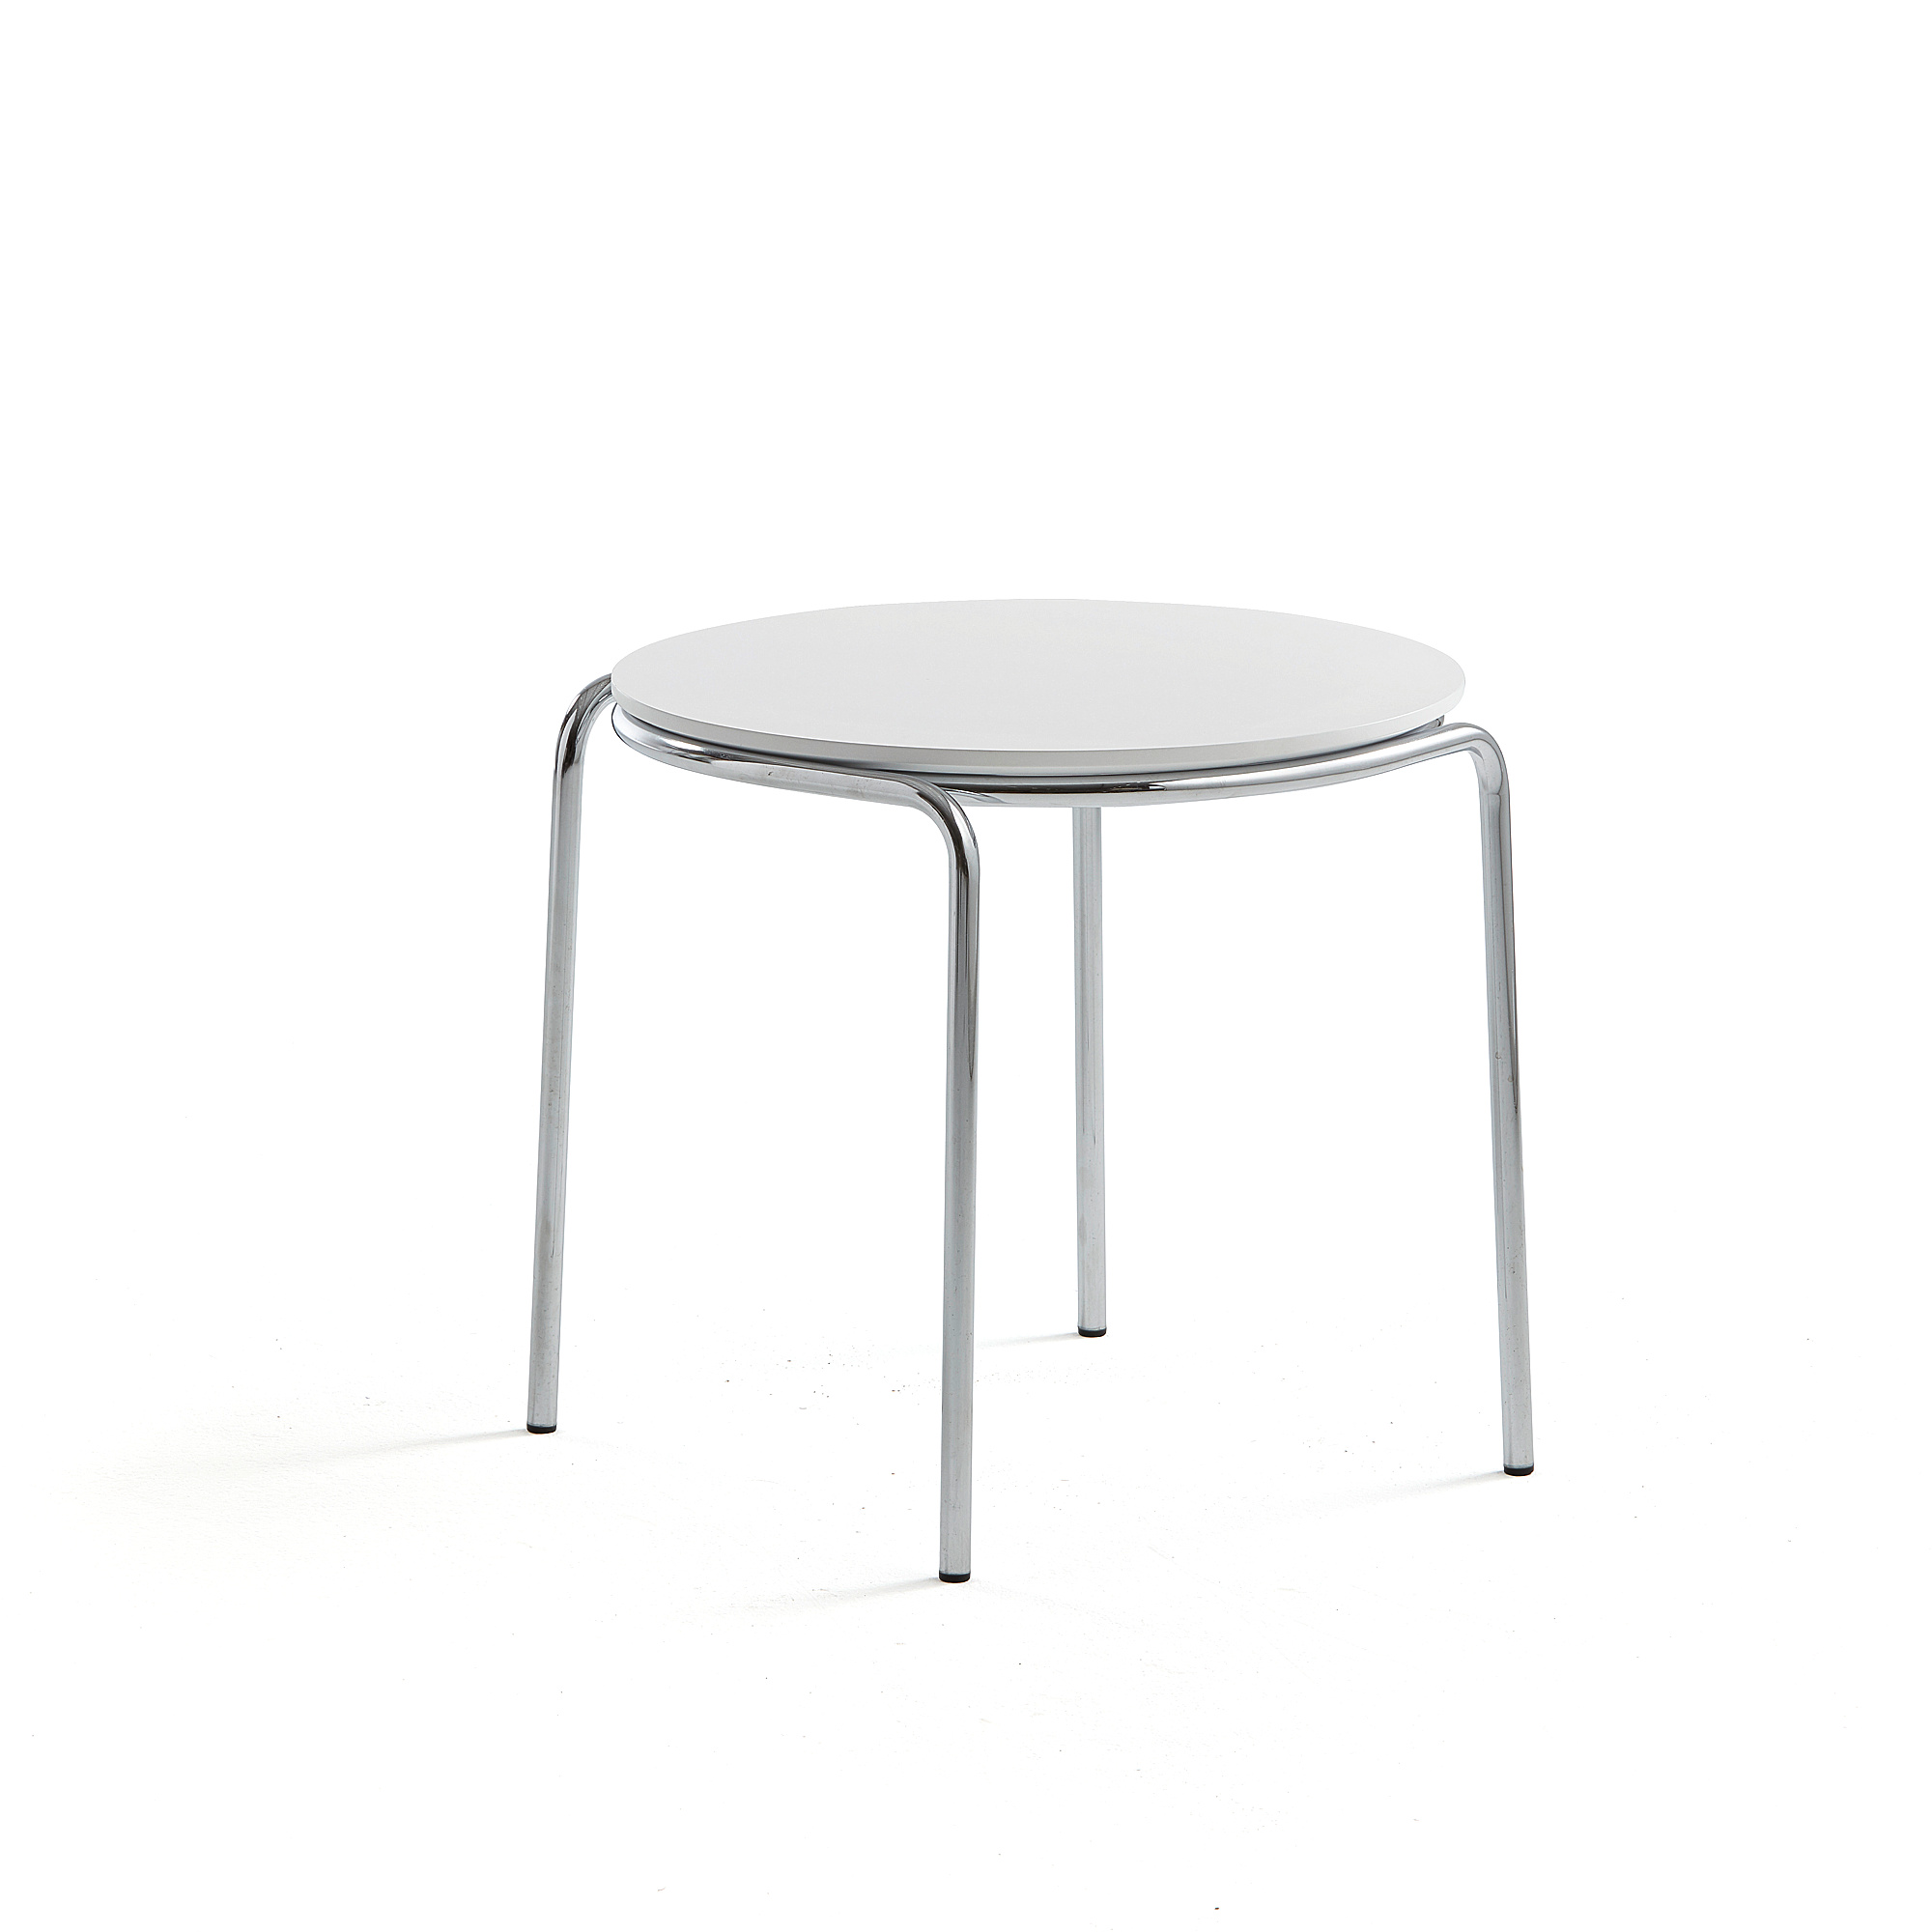 Konferenčný stolík ASHLEY, Ø570 x 470 mm, chróm, biela